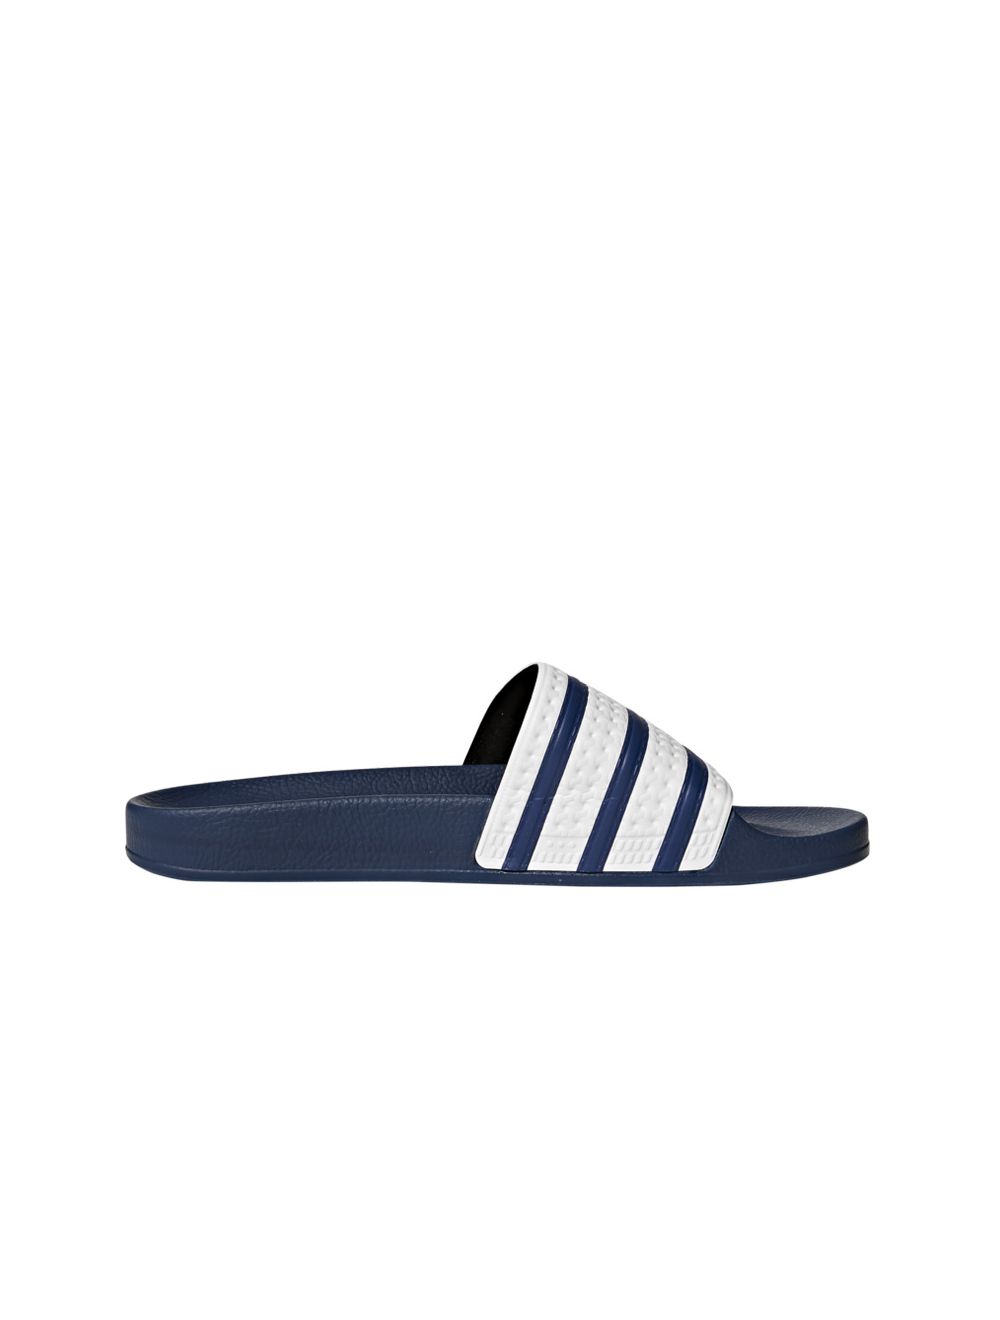 adidas adilette sandals blue